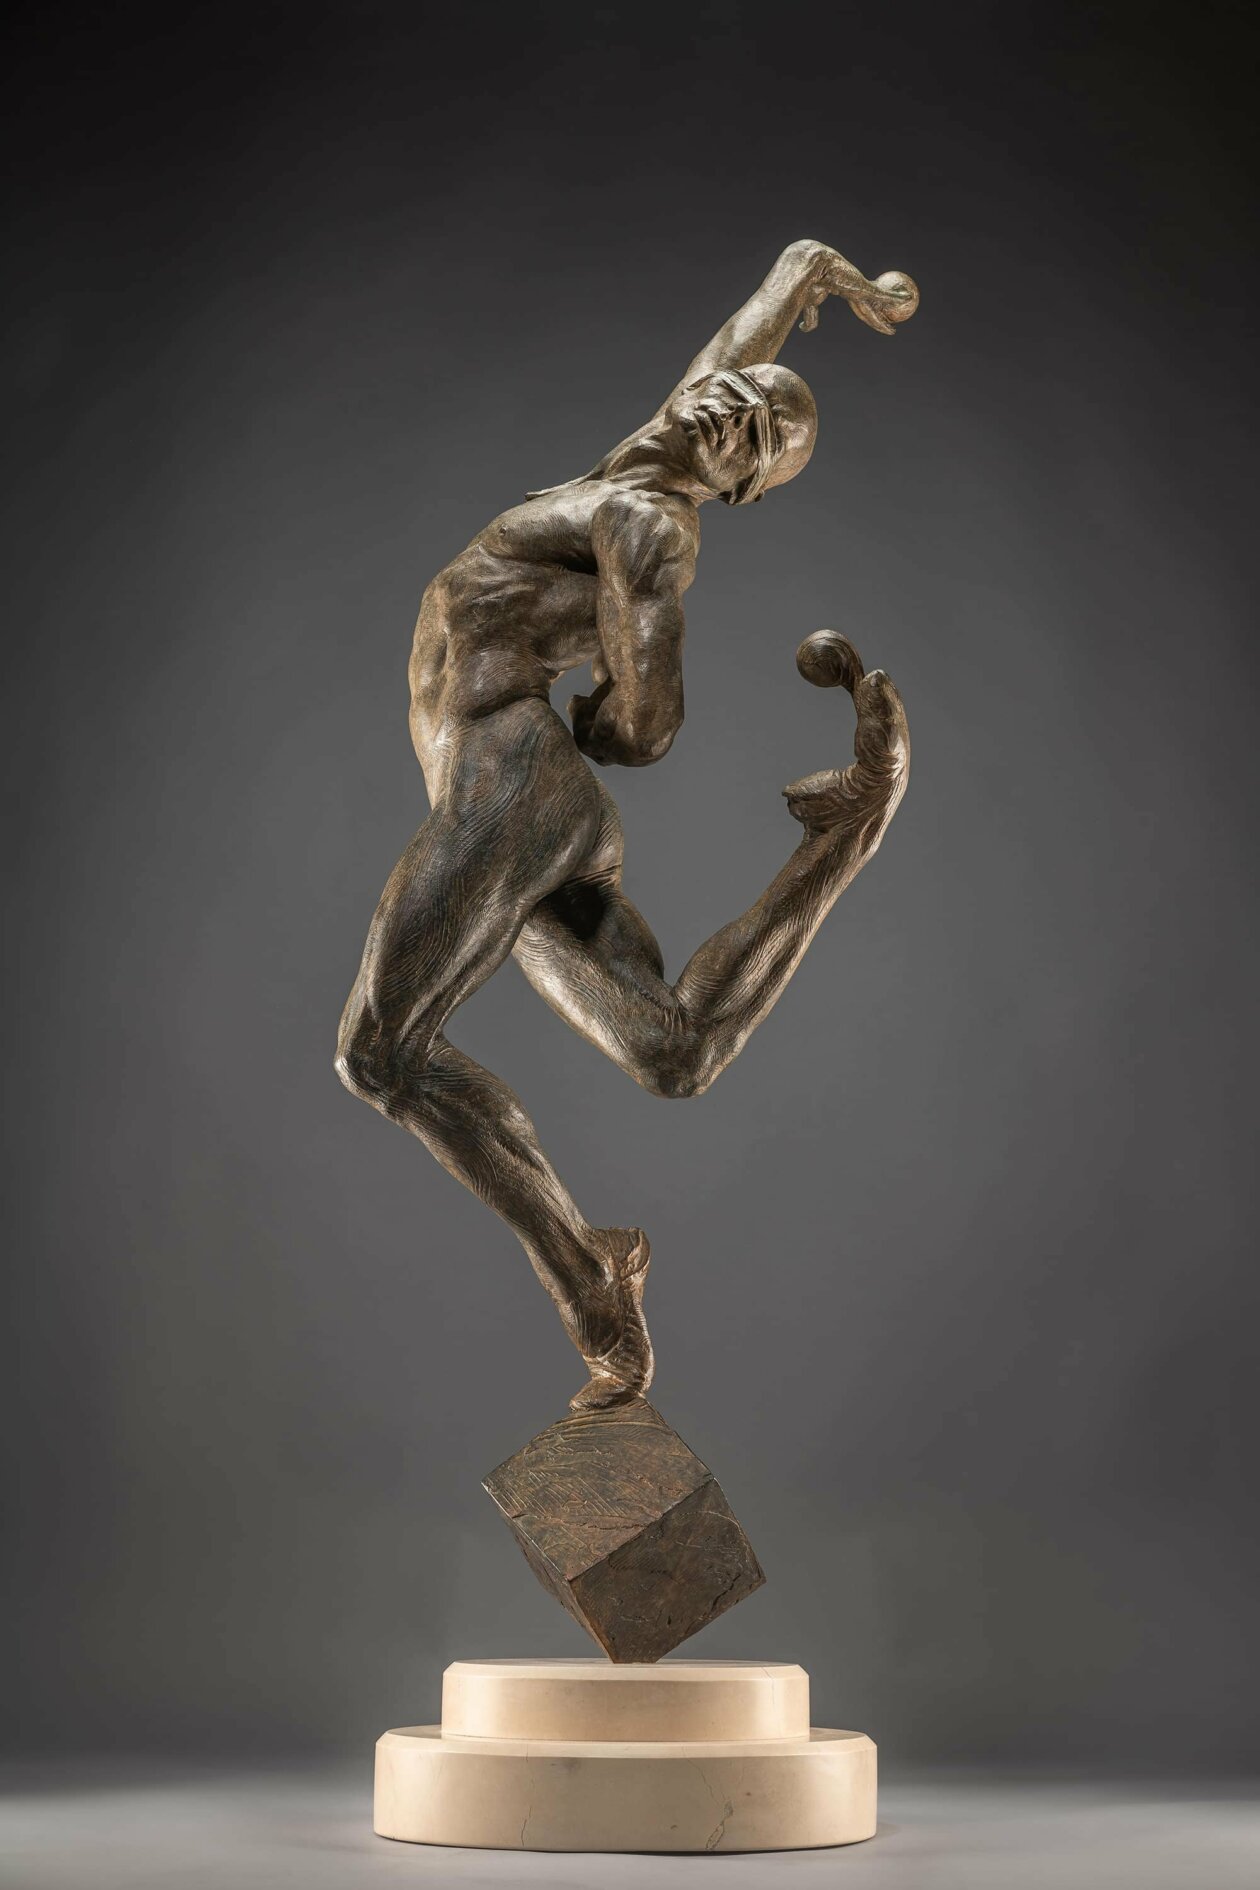 Poetic And Expressive Figurative Bronze Sculptures By Richard Macdonald (16)